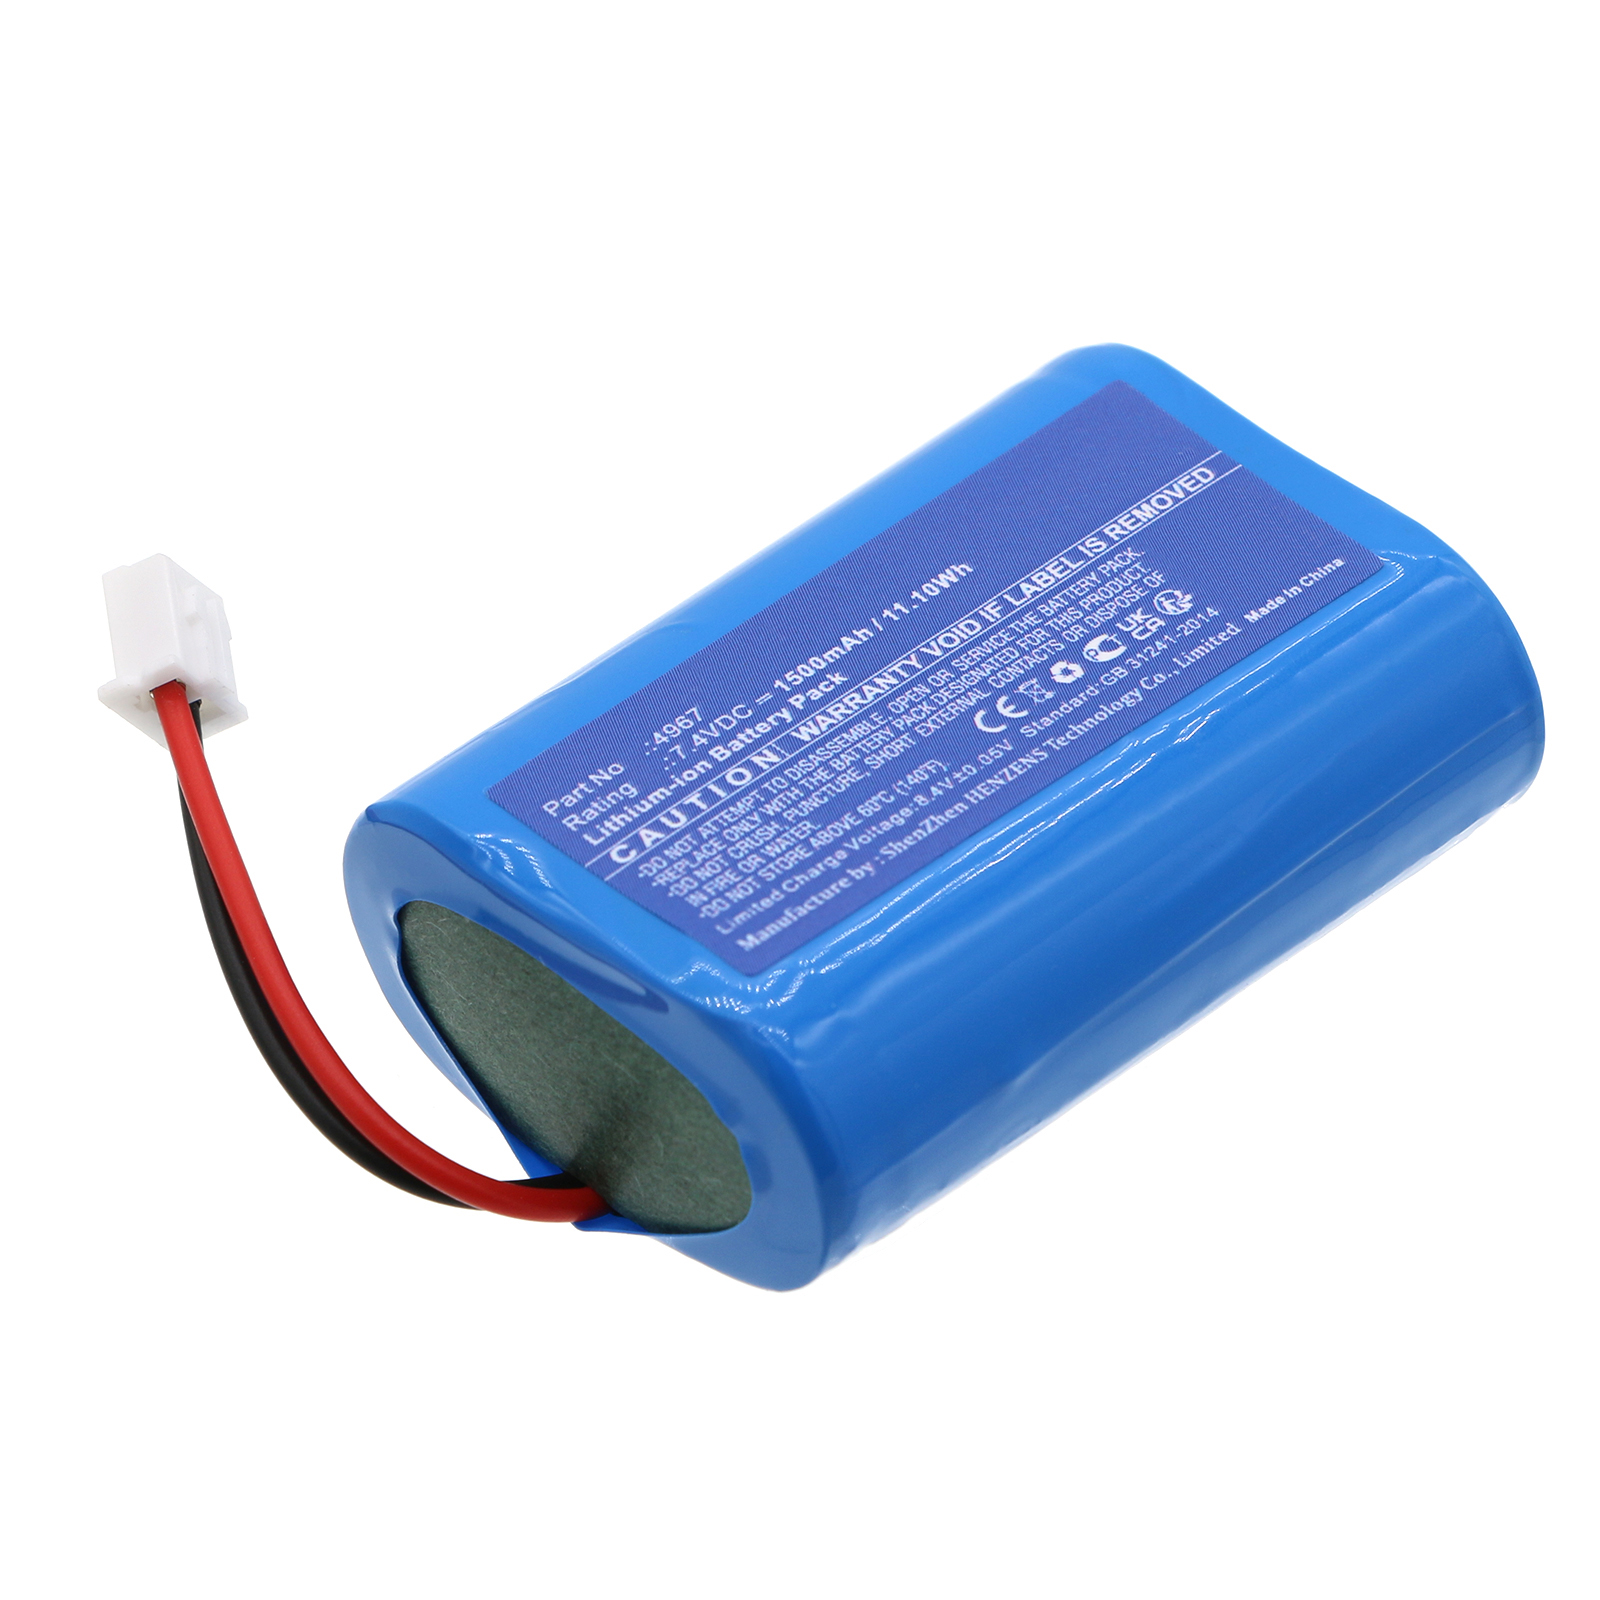 Synergy Digital Emergency Lighting Battery, Compatible with DOTLUX 4967 Emergency Lighting Battery (Li-ion, 7.4V, 1500mAh)